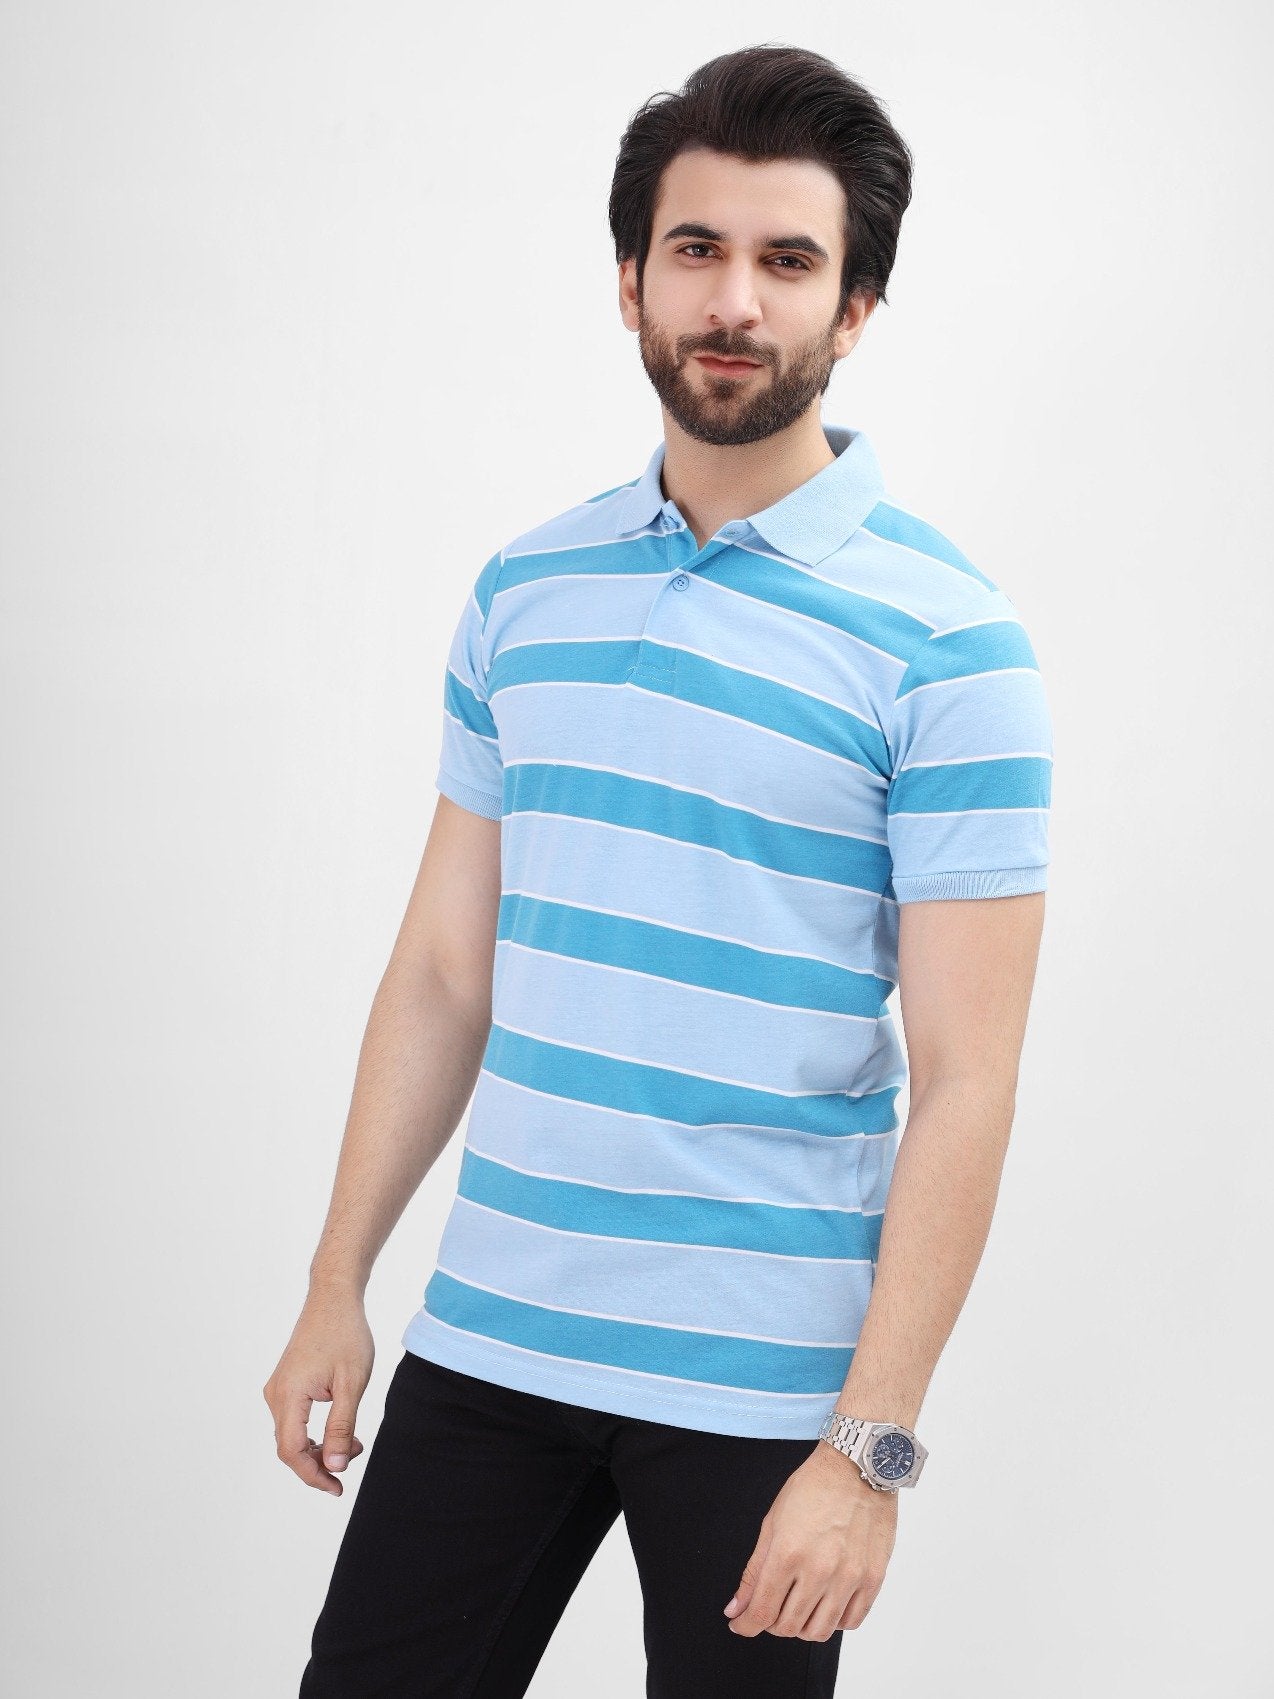 Men's Blue Polo Shirt - EMTPS21-018